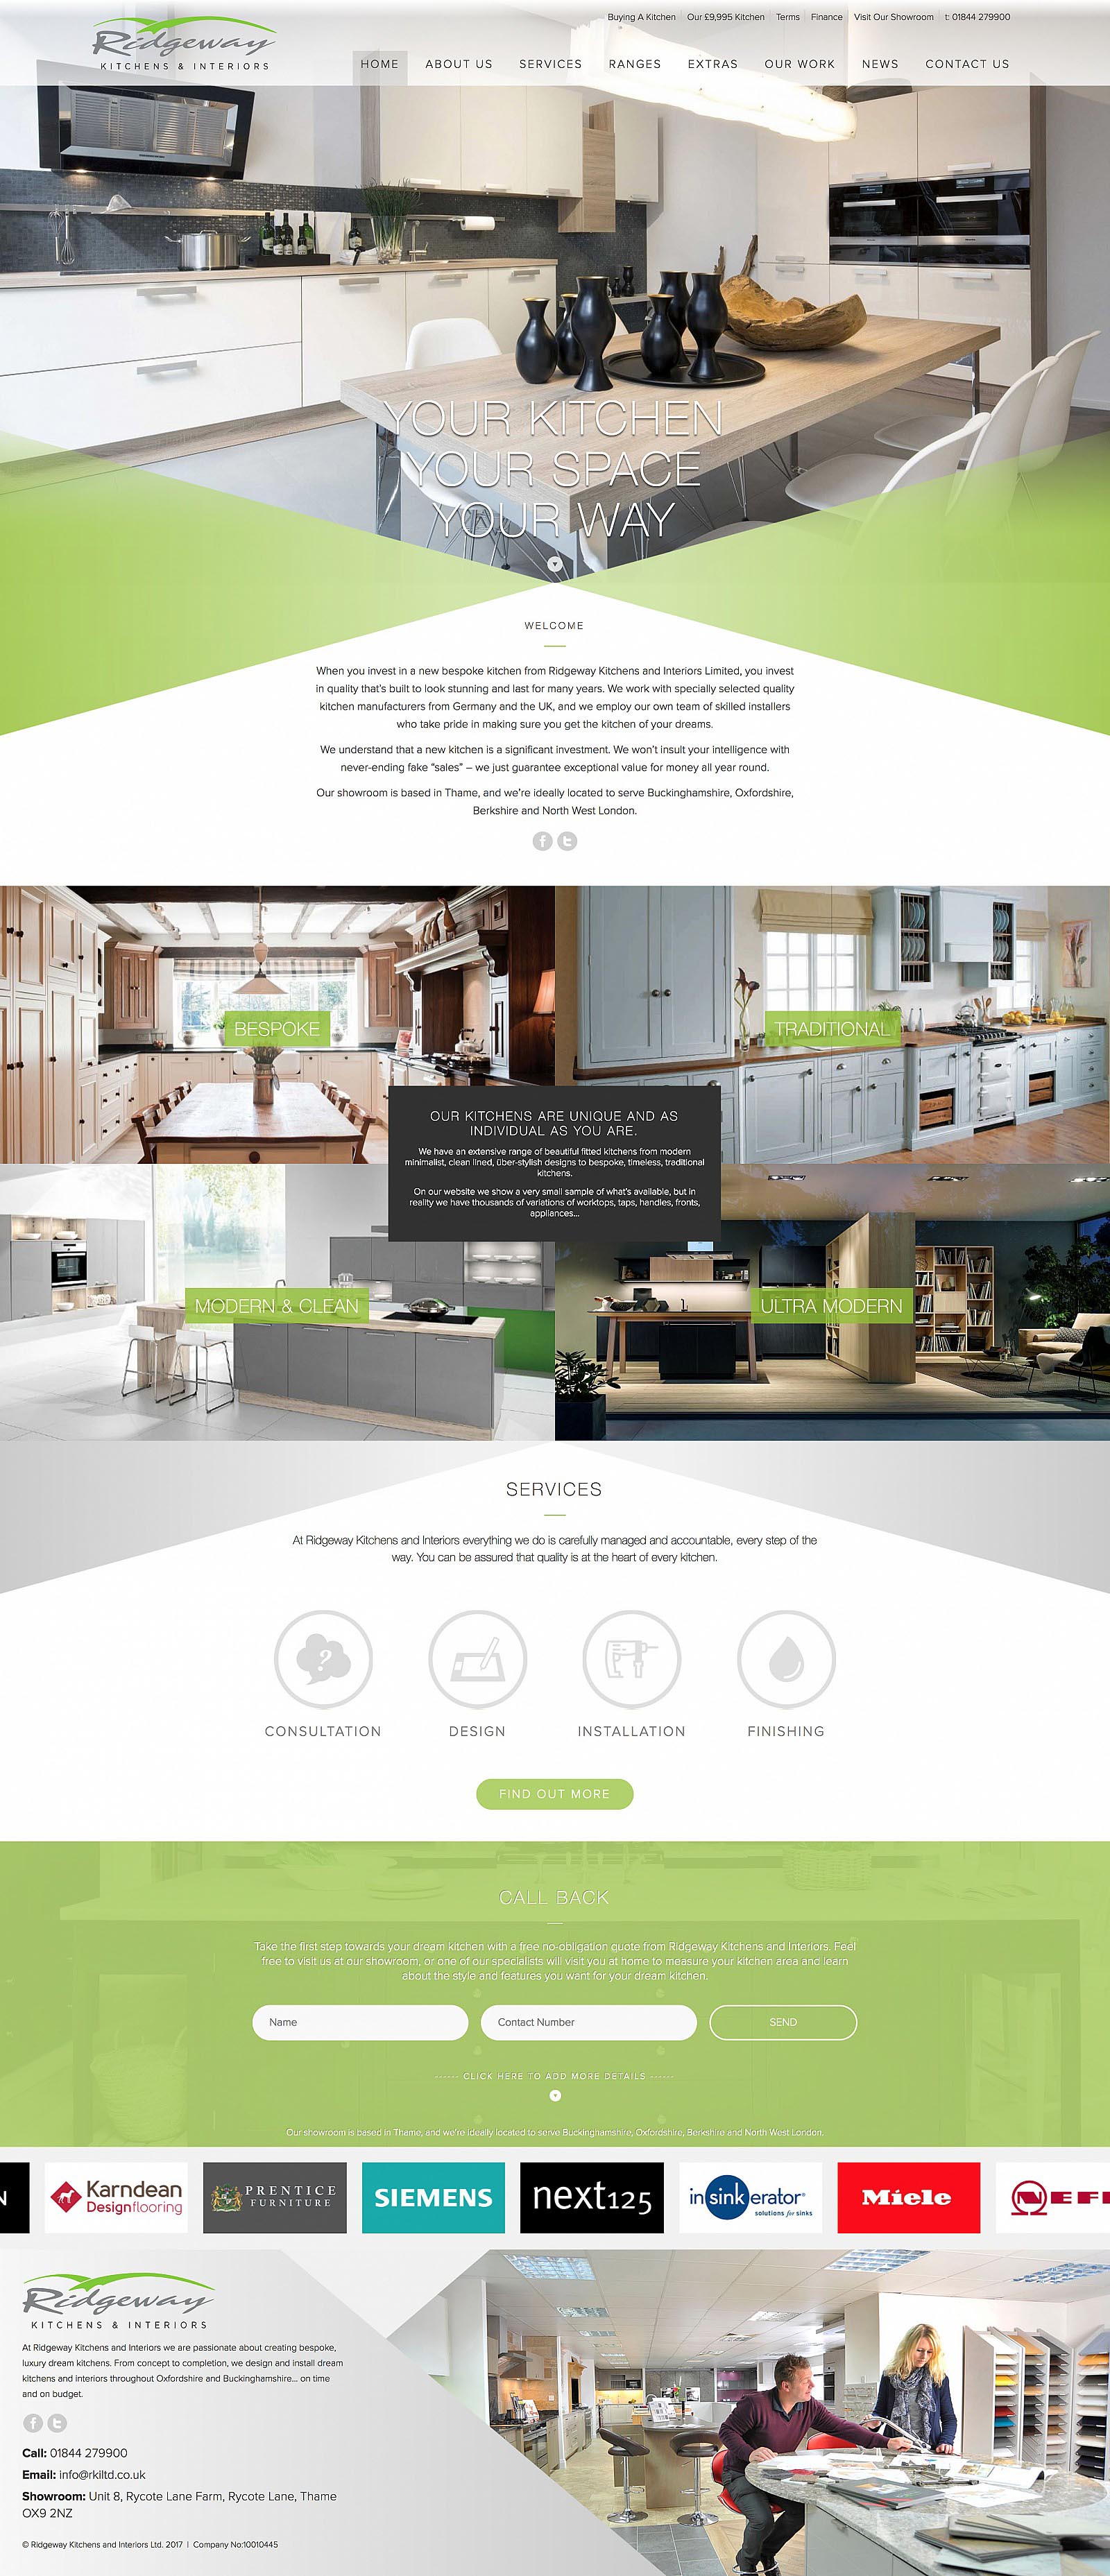 Ridgeway Kitchens - Home Page